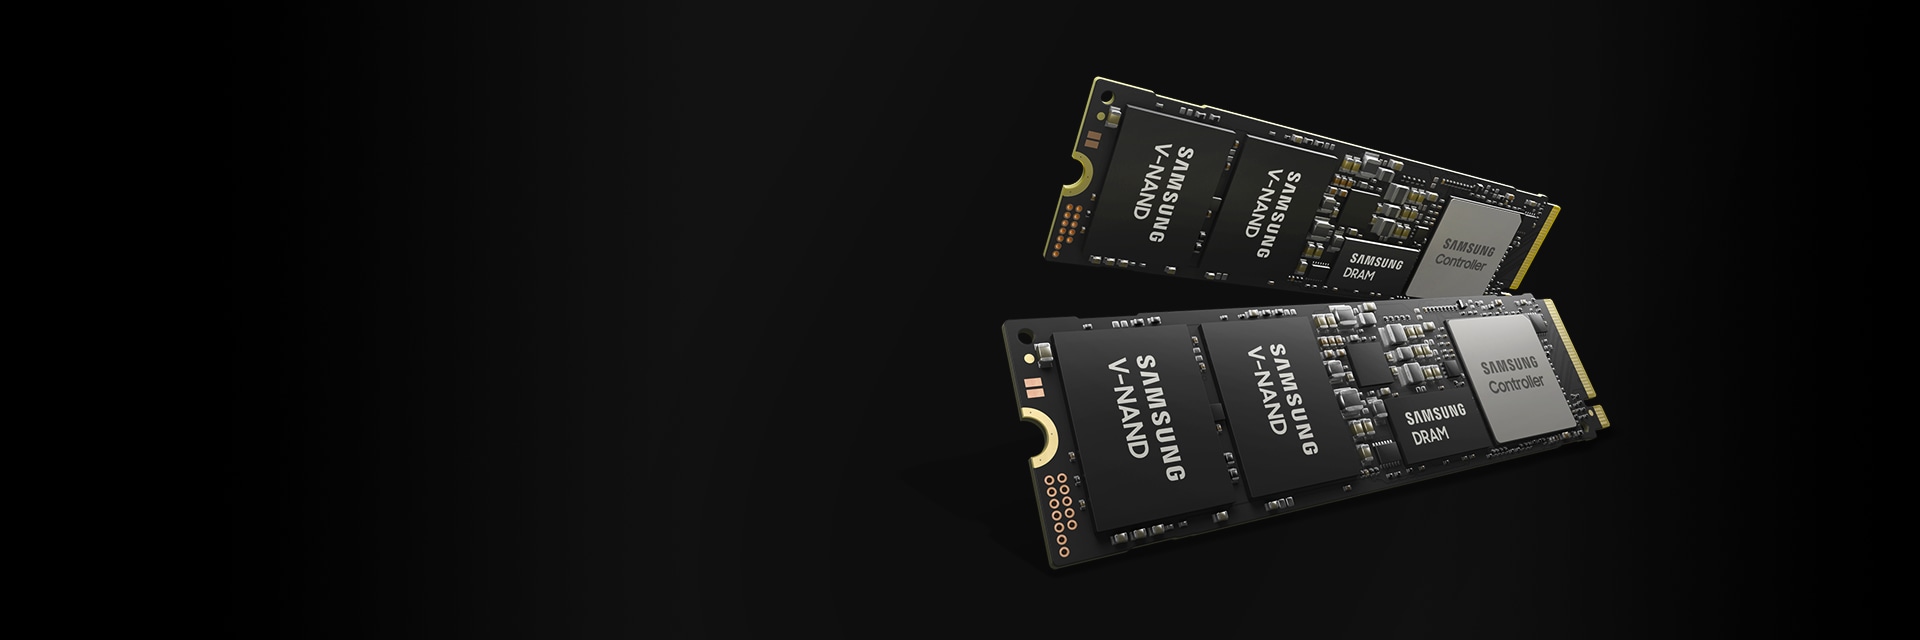 Samsung Semiconductor Enterprise SSD, Innovating Enterprise Storage